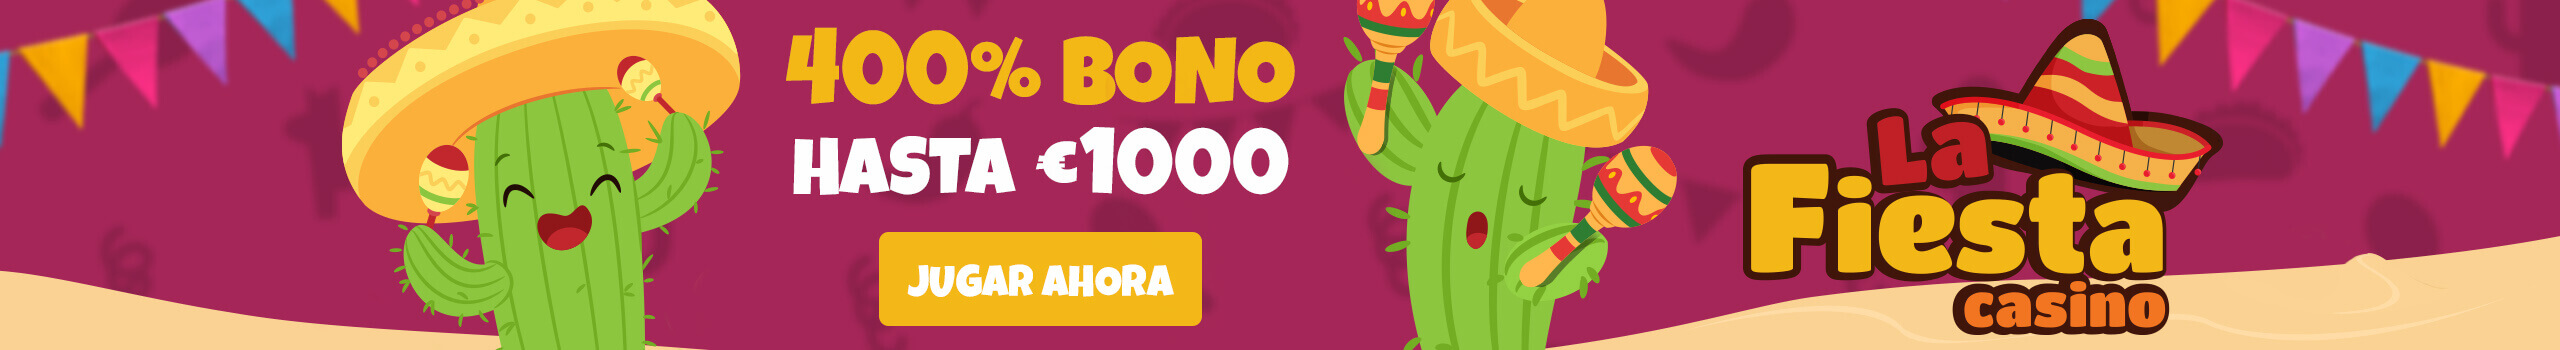 Casino star juegos gratis online Porto bono sin deposito - 15530